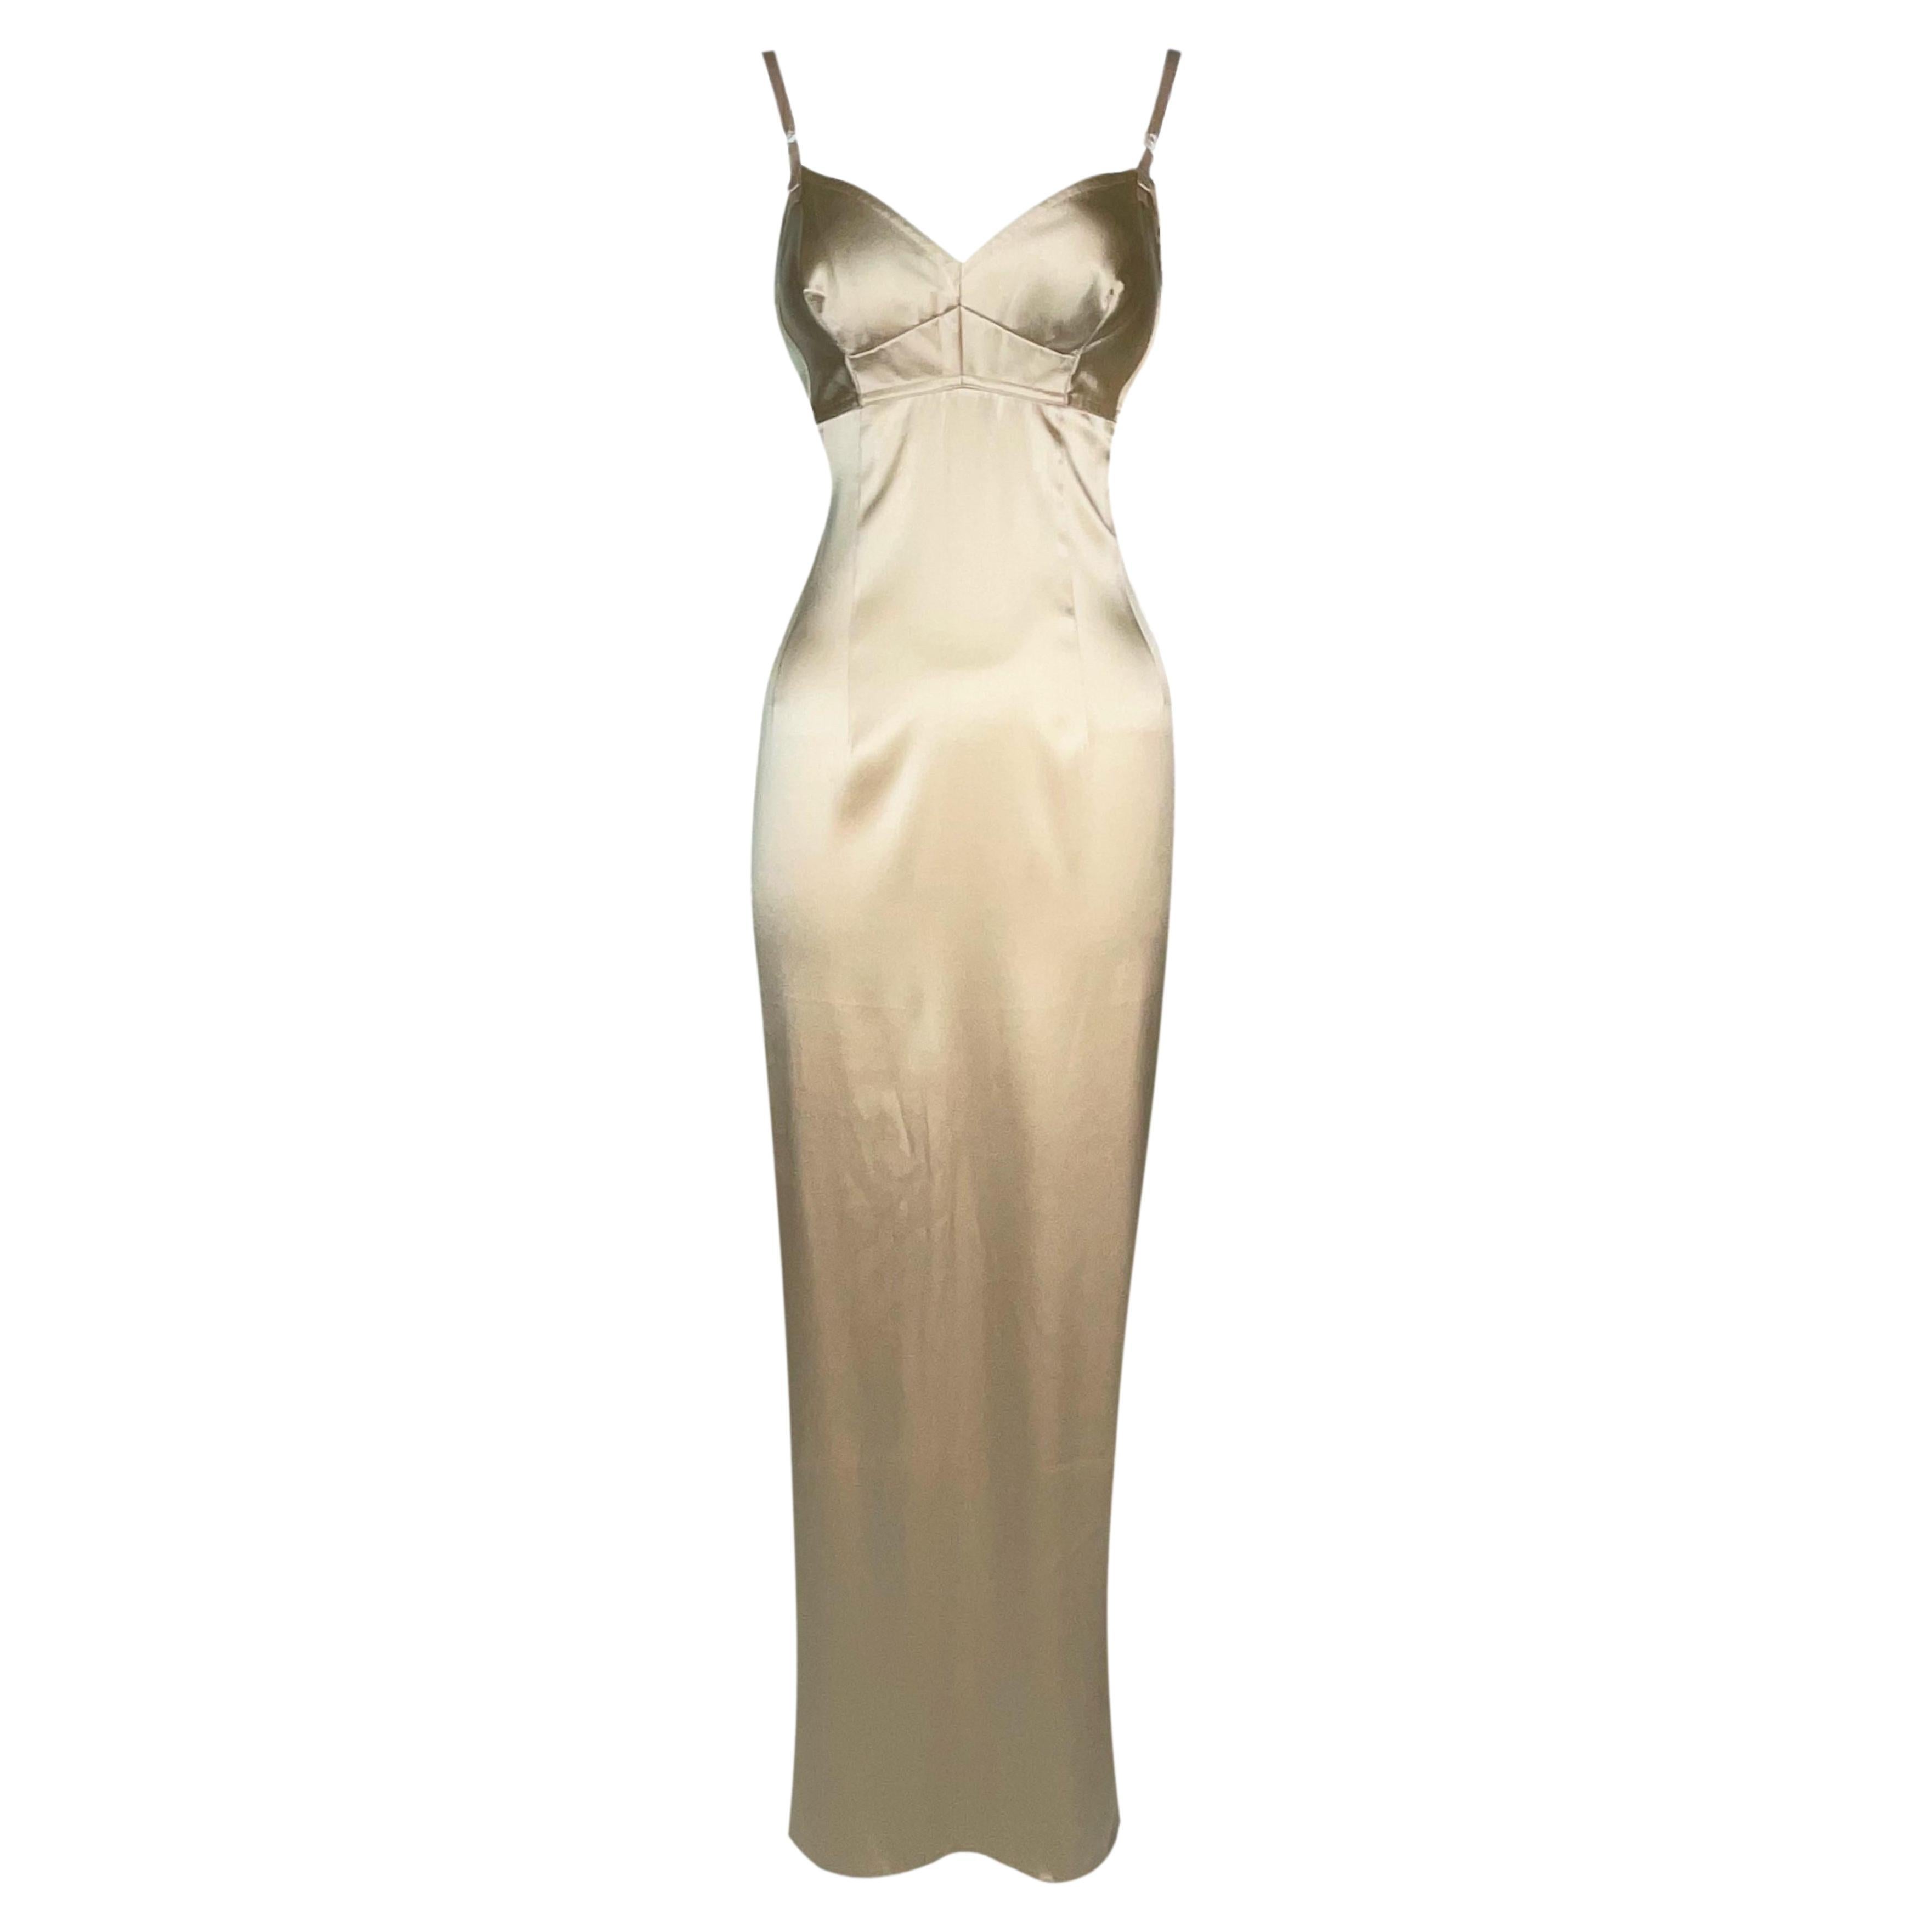 S/S 1997 Dolce & Gabbana Pin-Up Nude Champagne Lingerie Slip Dress